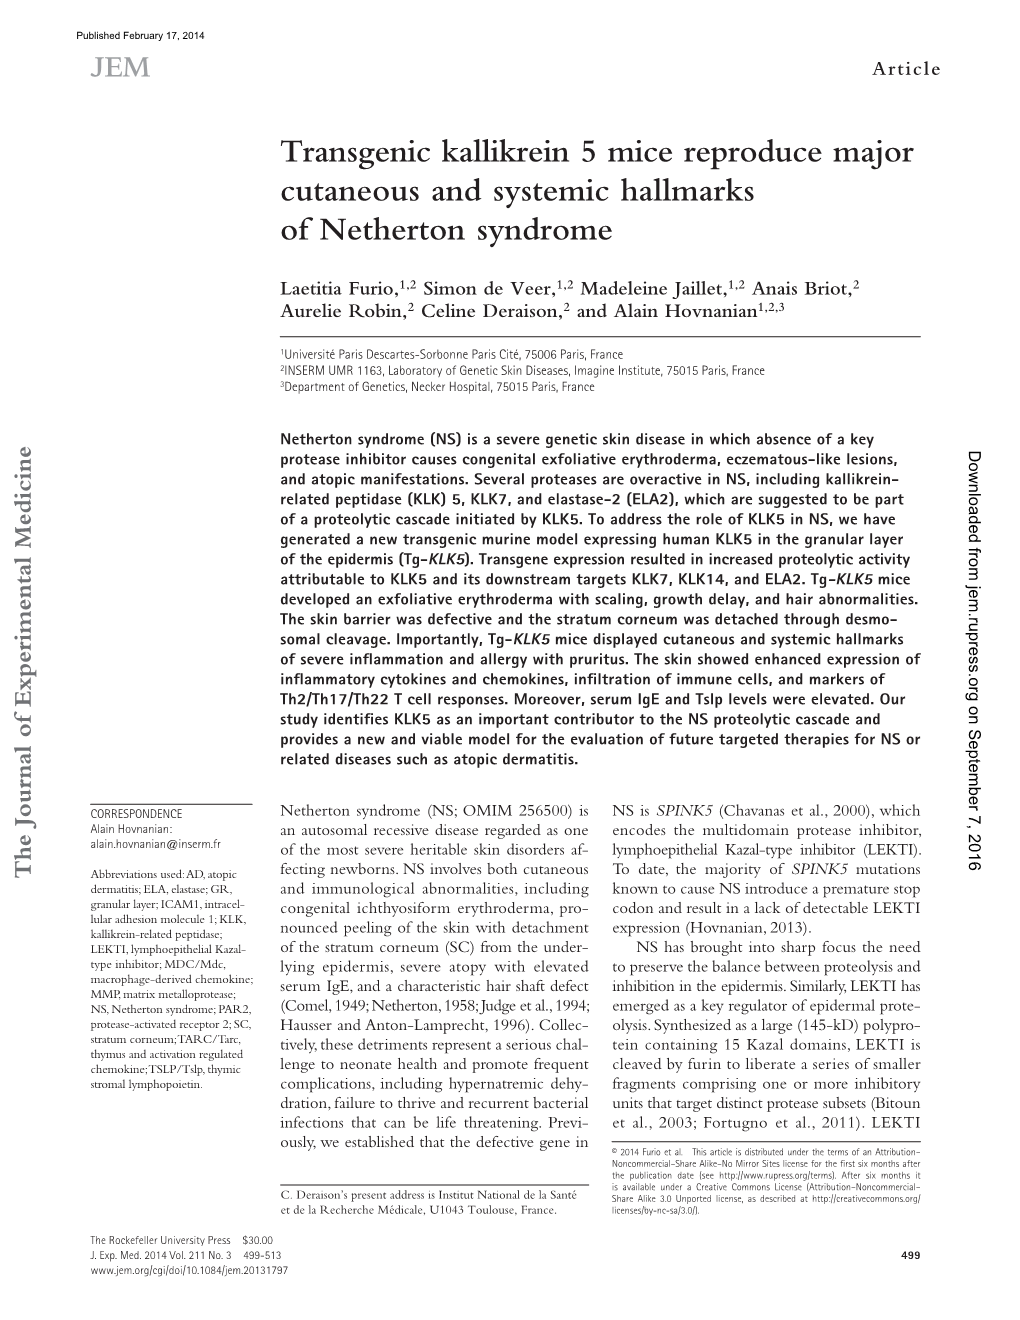 Transgenic Kallikrein 5 Mice Reproduce Major Cutaneous and Systemic Hallmarks of Netherton Syndrome